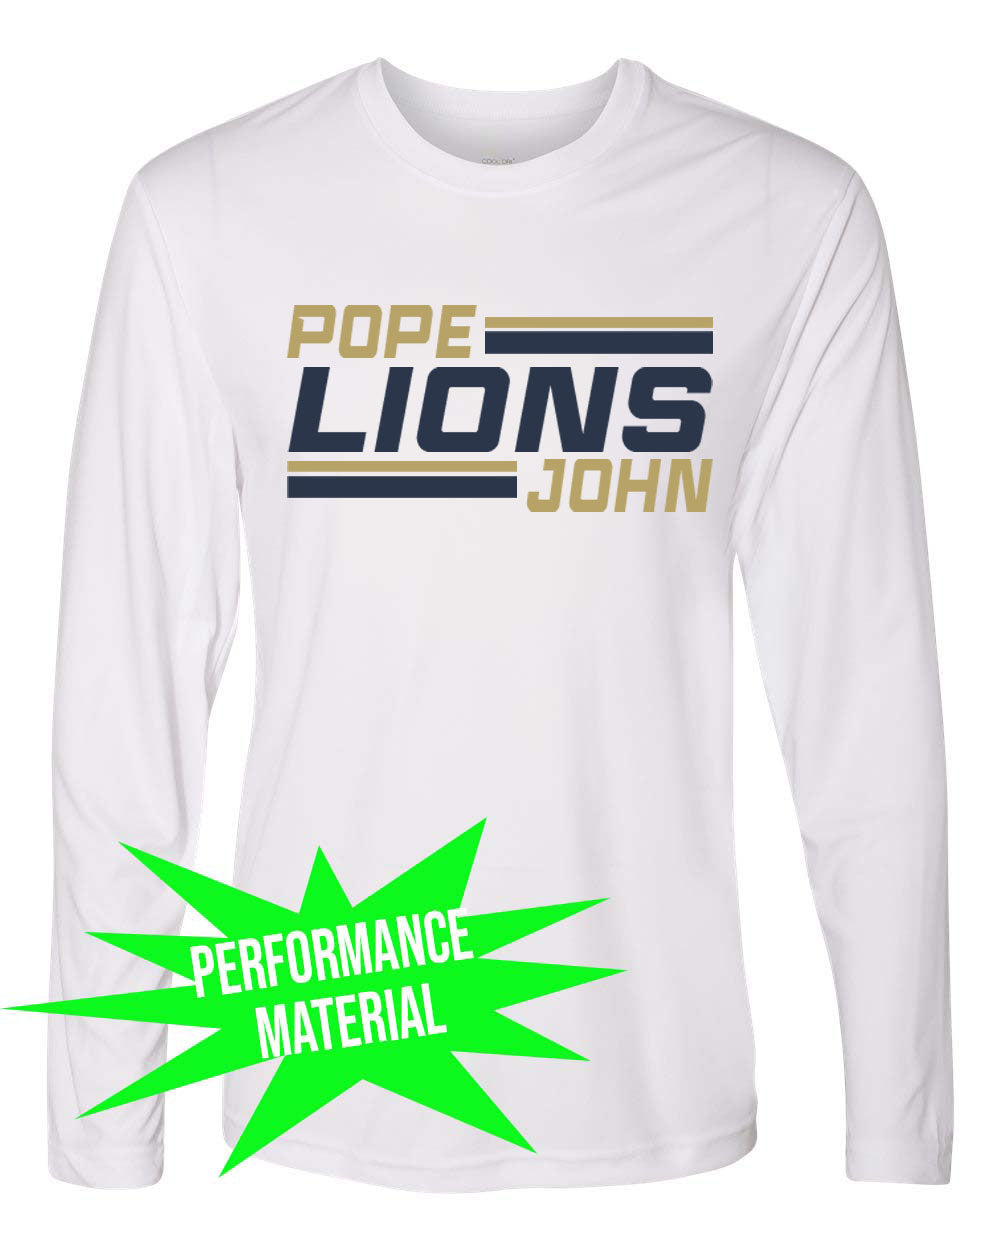 Pope John Cheer Performance Material Design 5 Long Sleeve Shirt